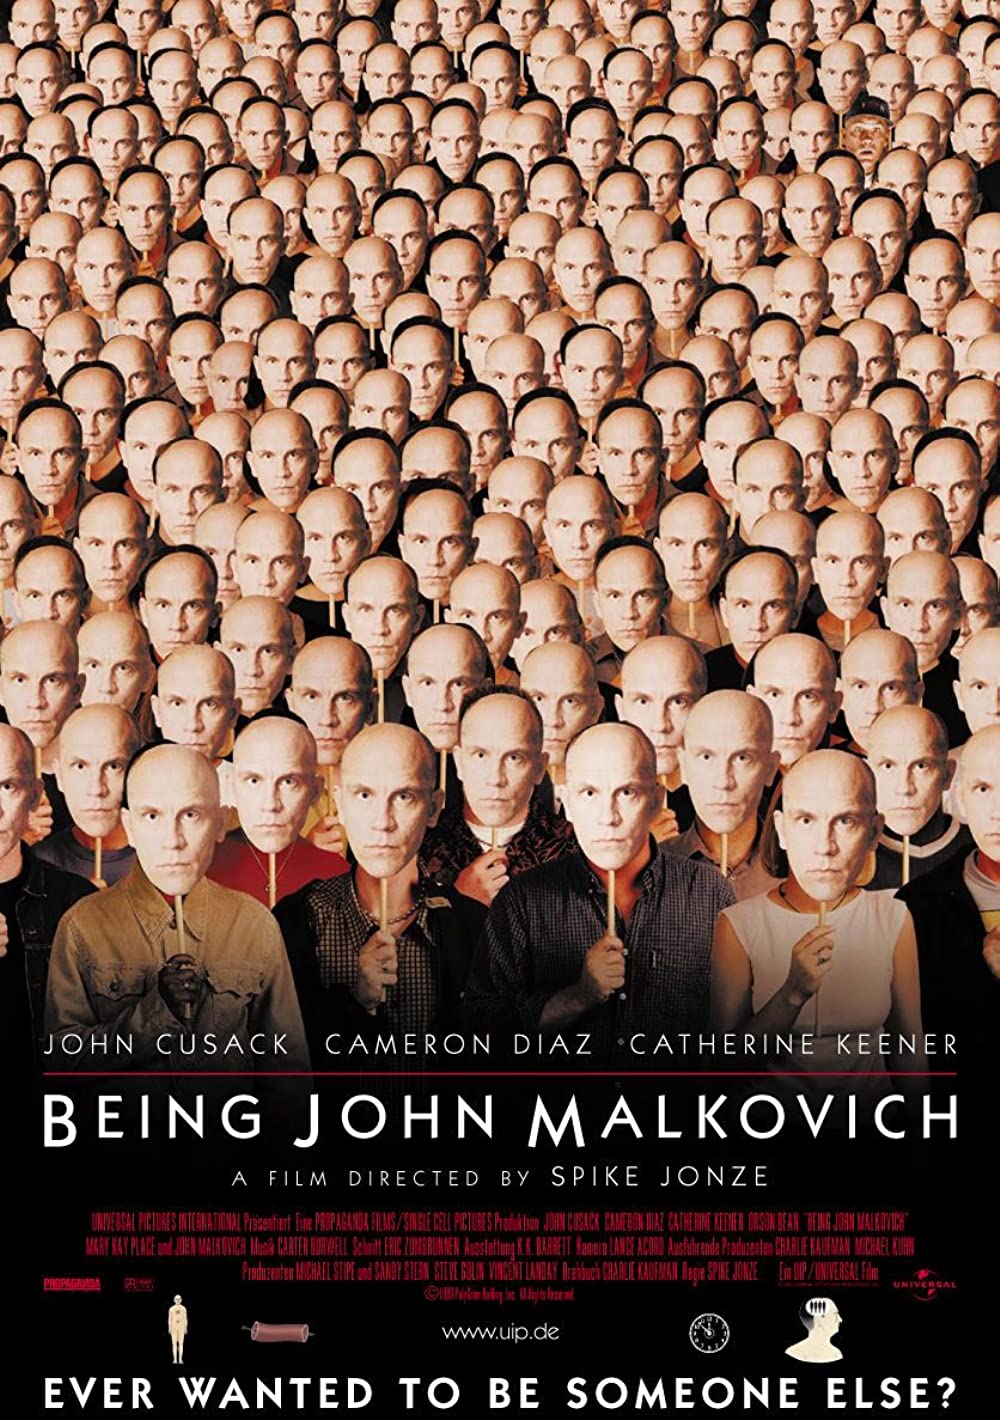 Filmbeschreibung zu Being John Malkovich